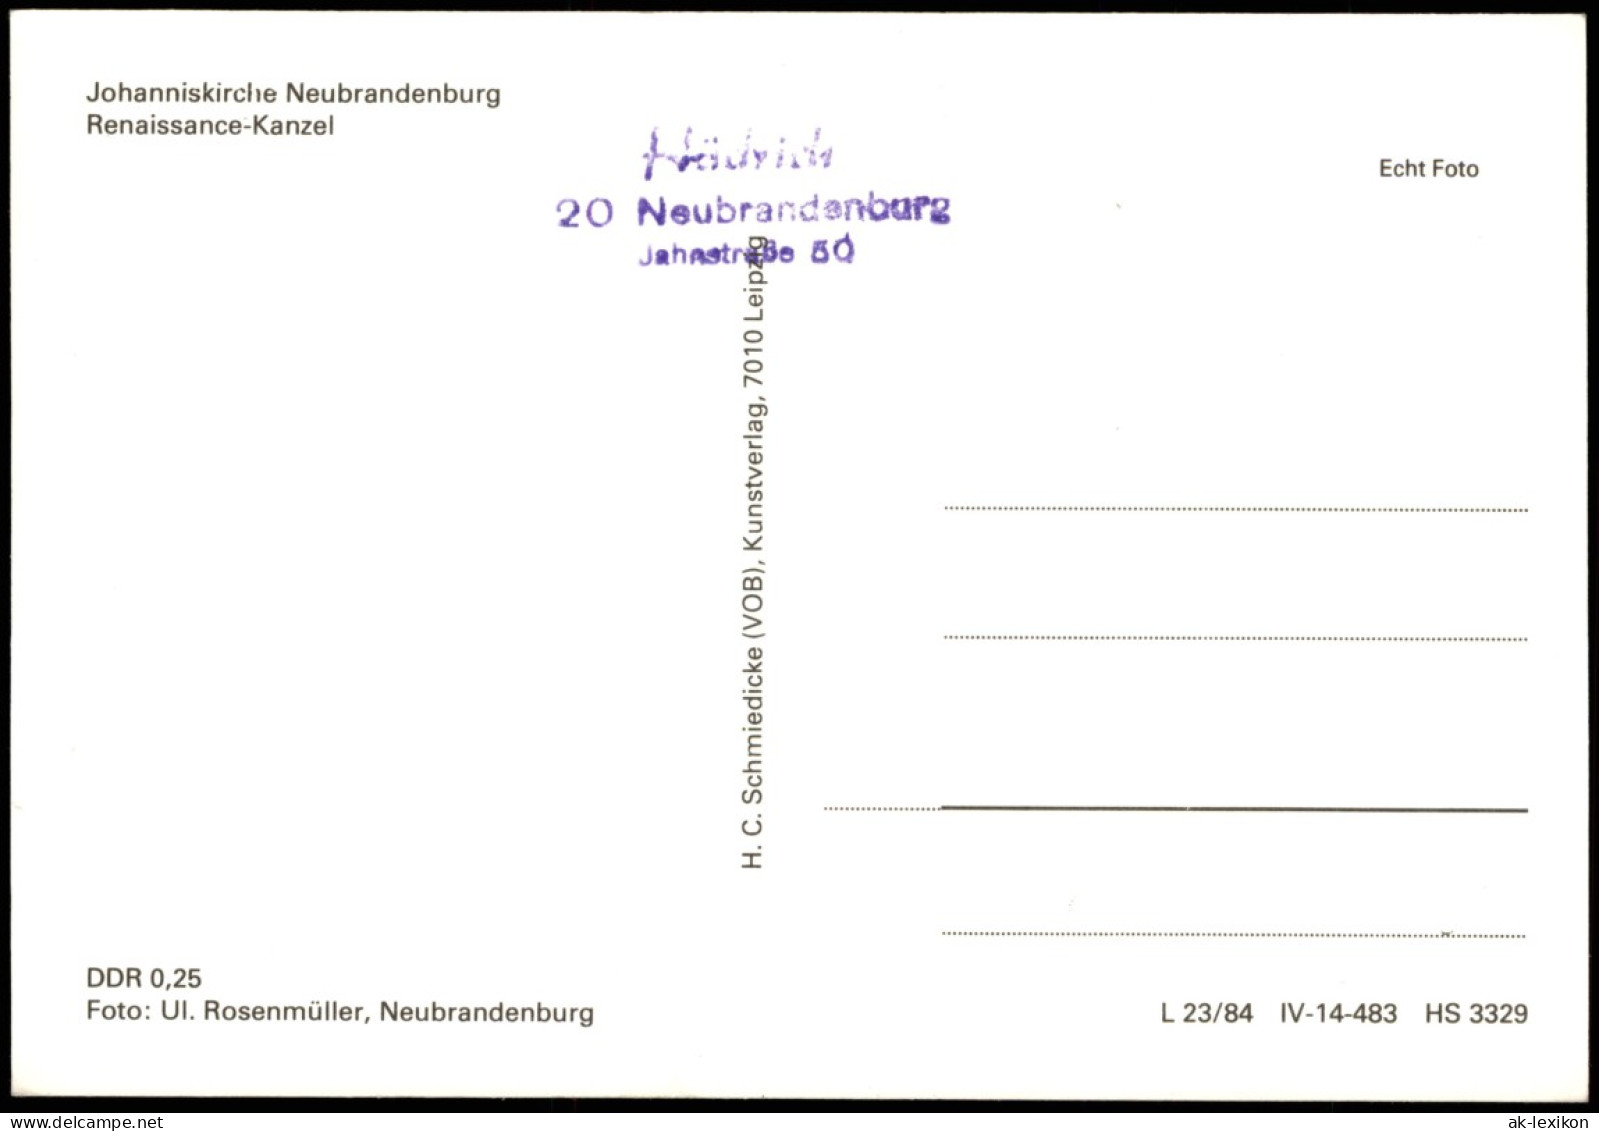 Ansichtskarte Neubrandenburg Johanniskirche Renaissance-Kanzel 1984 - Neubrandenburg